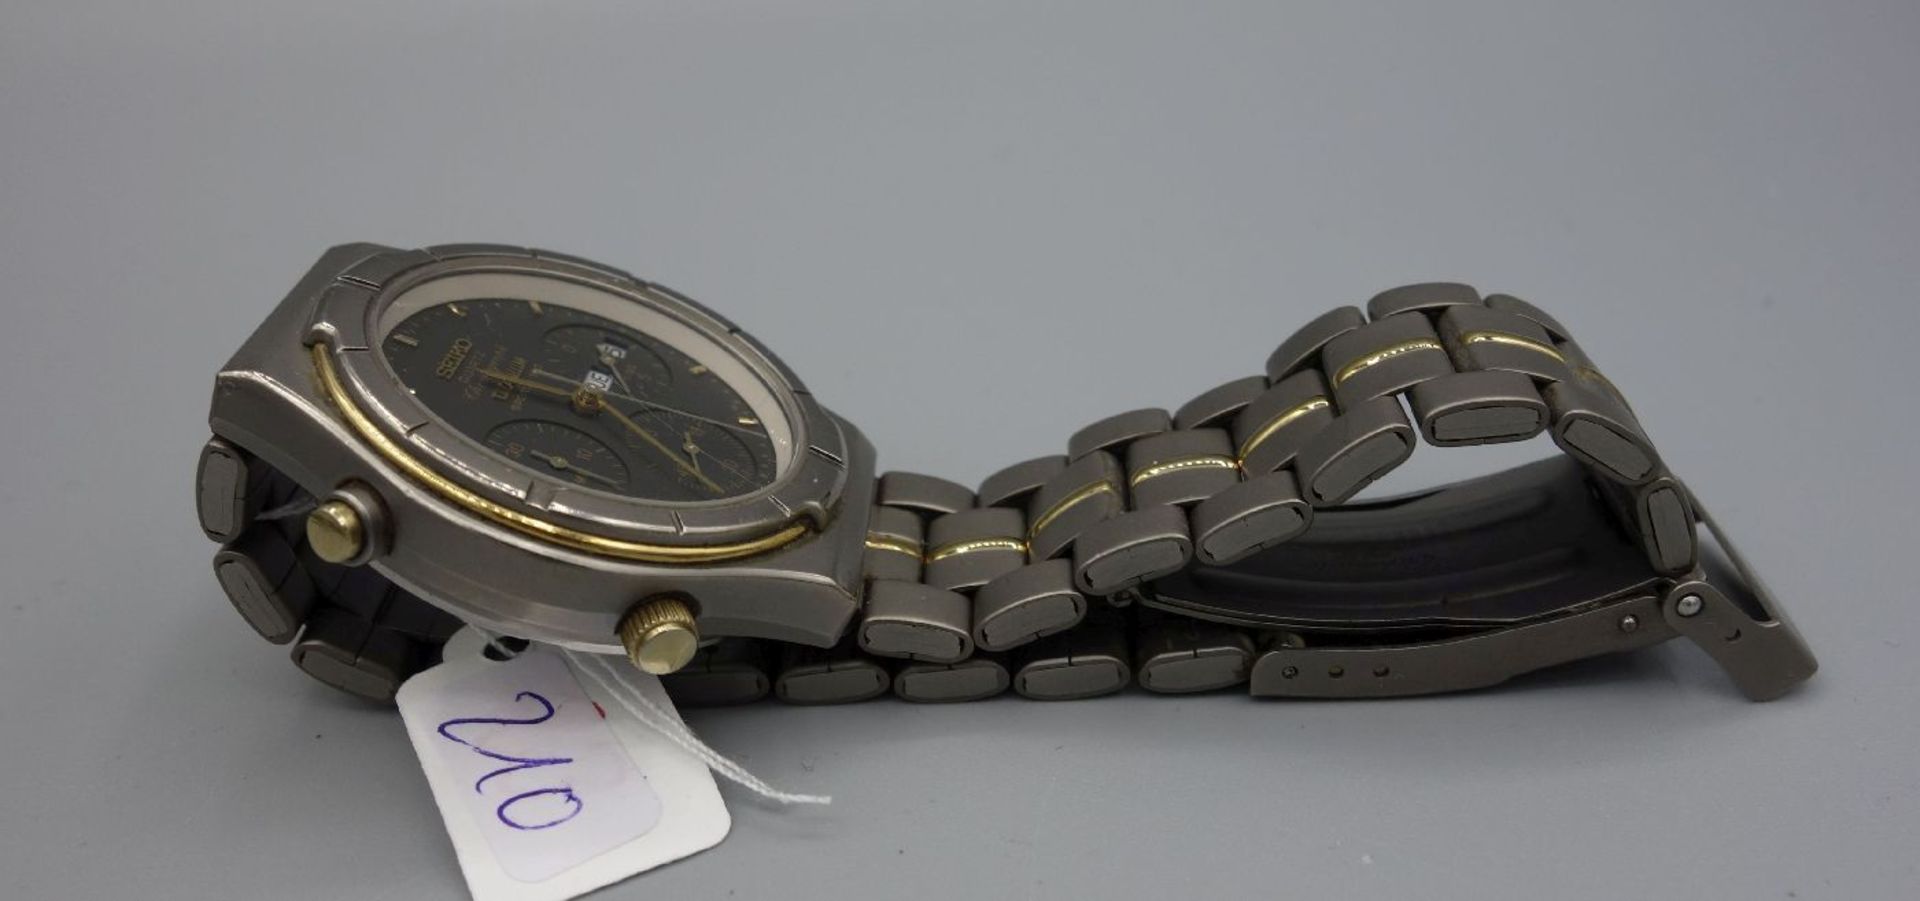 ARMBANDUHR: SEIKO CHRONOGRAPH TITANIUM SPORTS 100 / wristwatch, Japan, Quartz. Stahlgehäuse und - Bild 4 aus 7